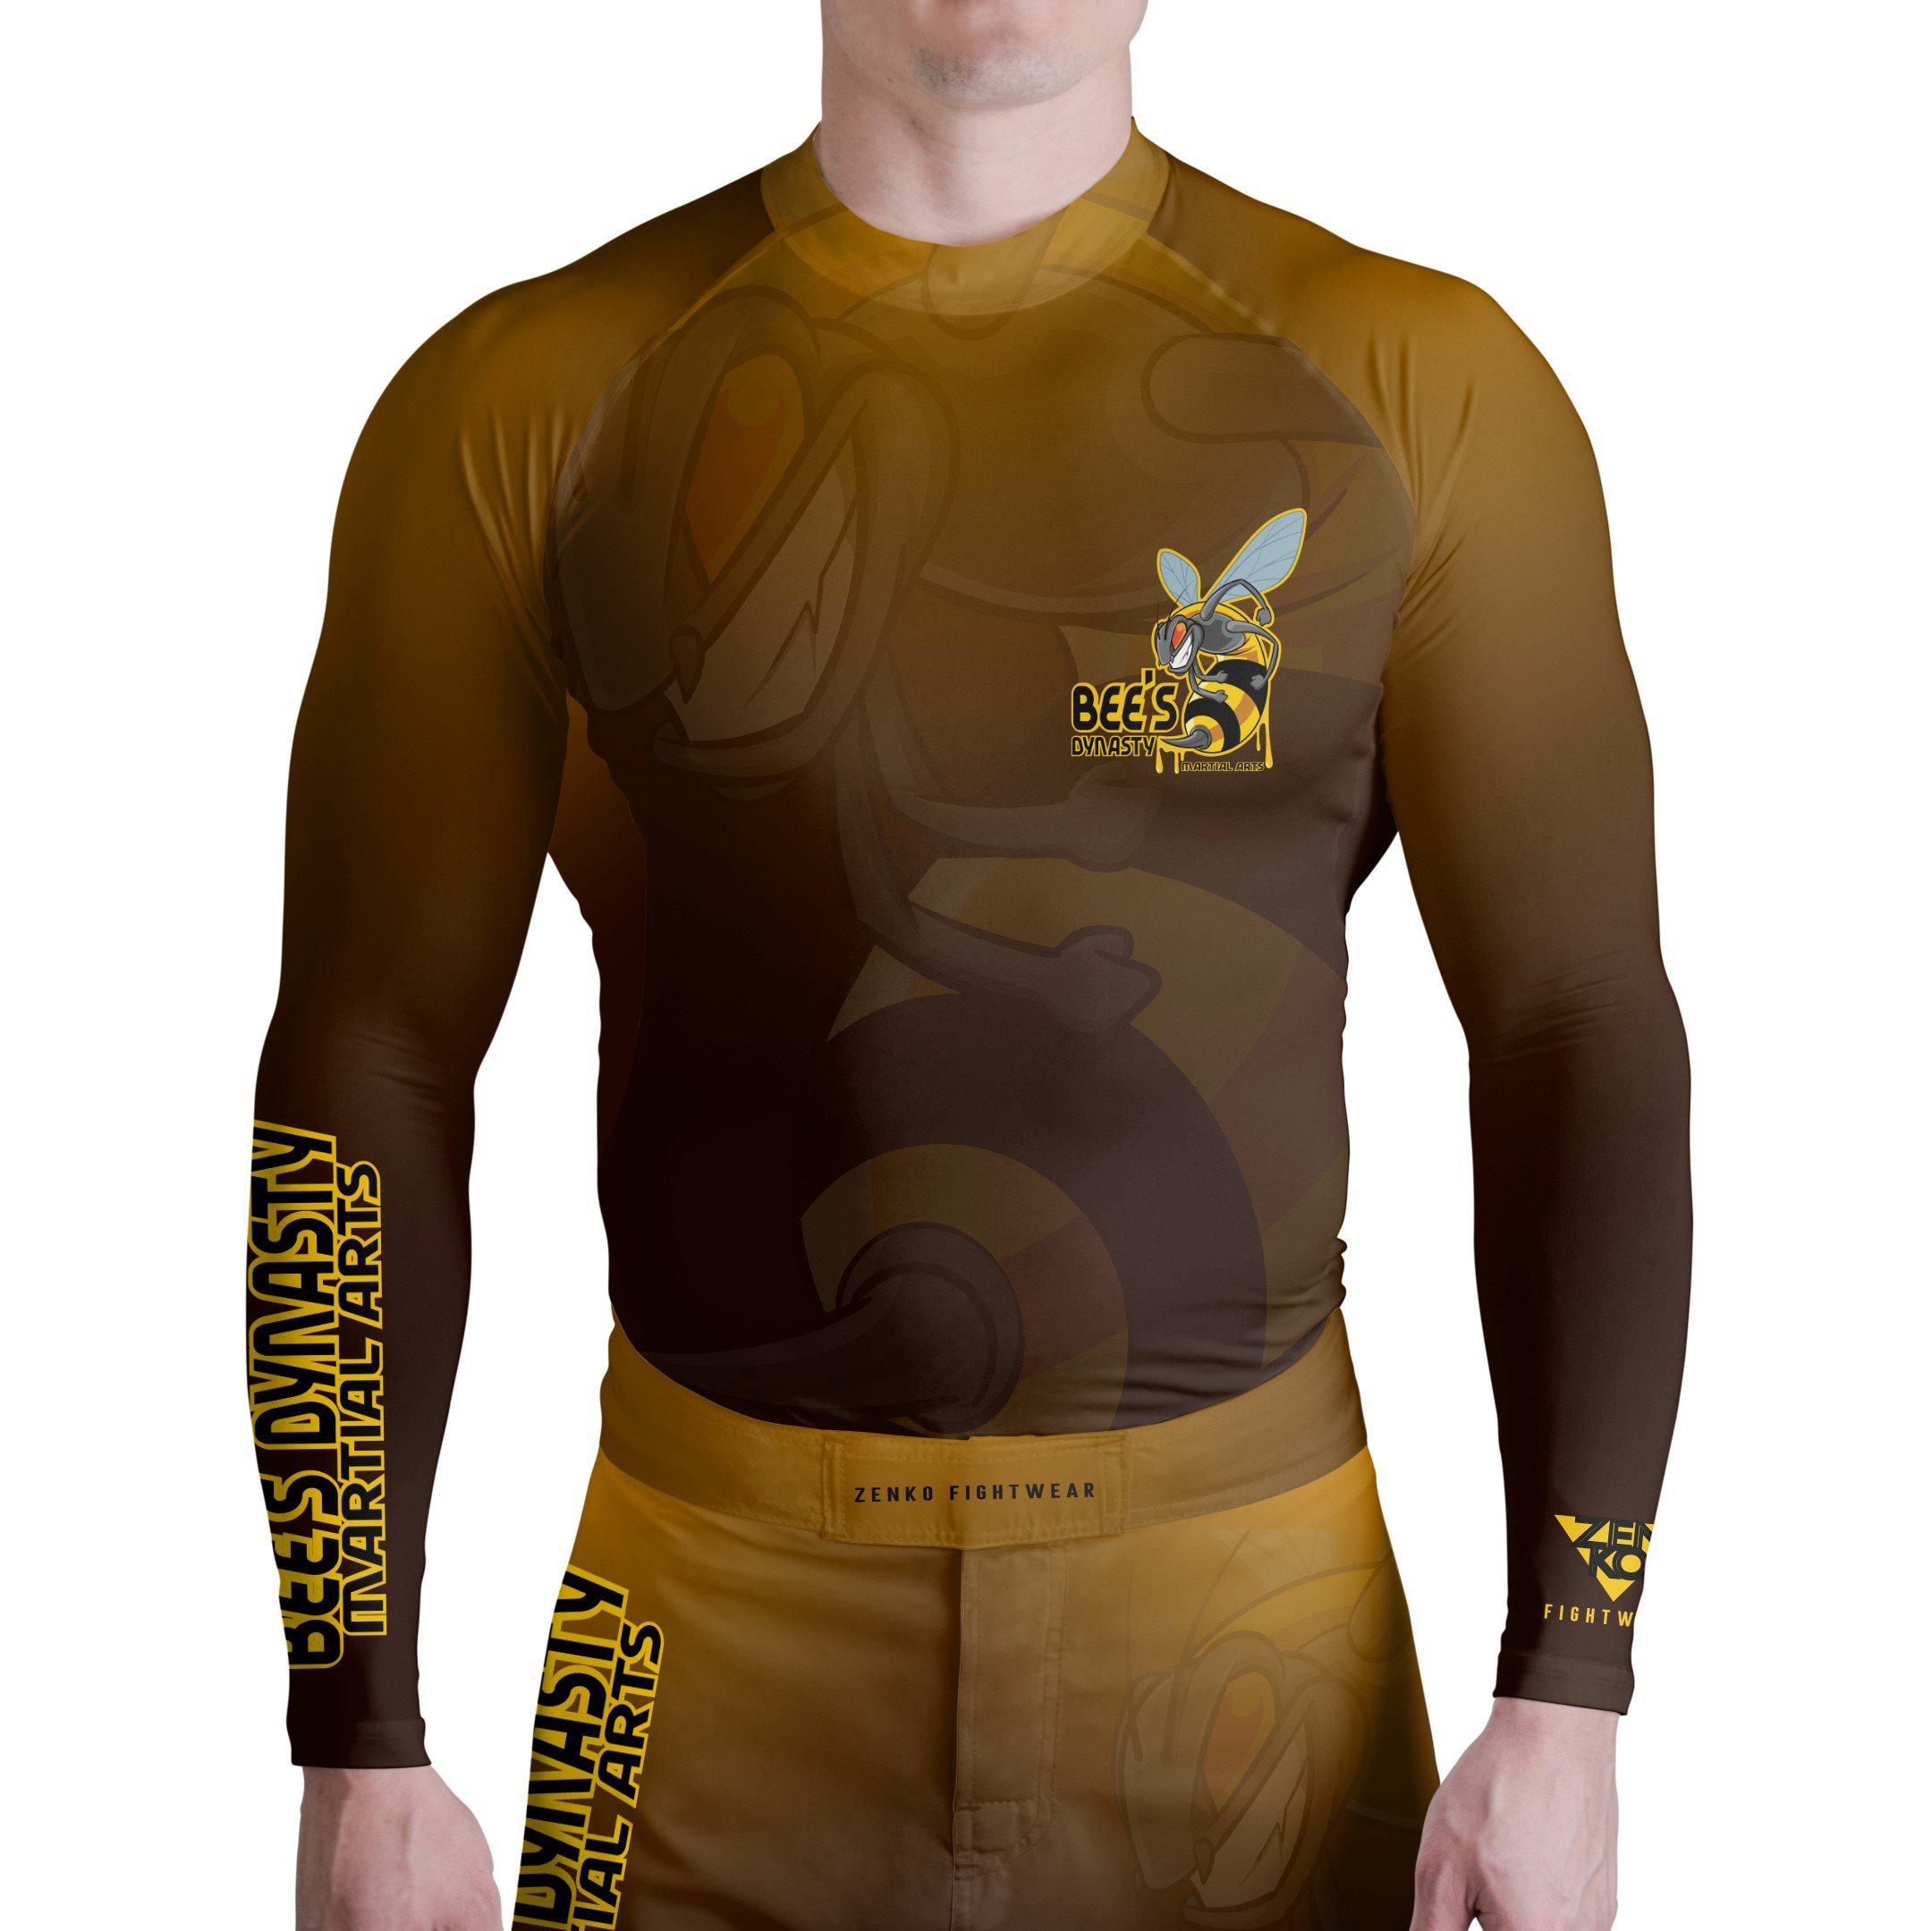 Bee's Dynasty Long Sleeve Rashguard (Yellow) Zenko Fightwear